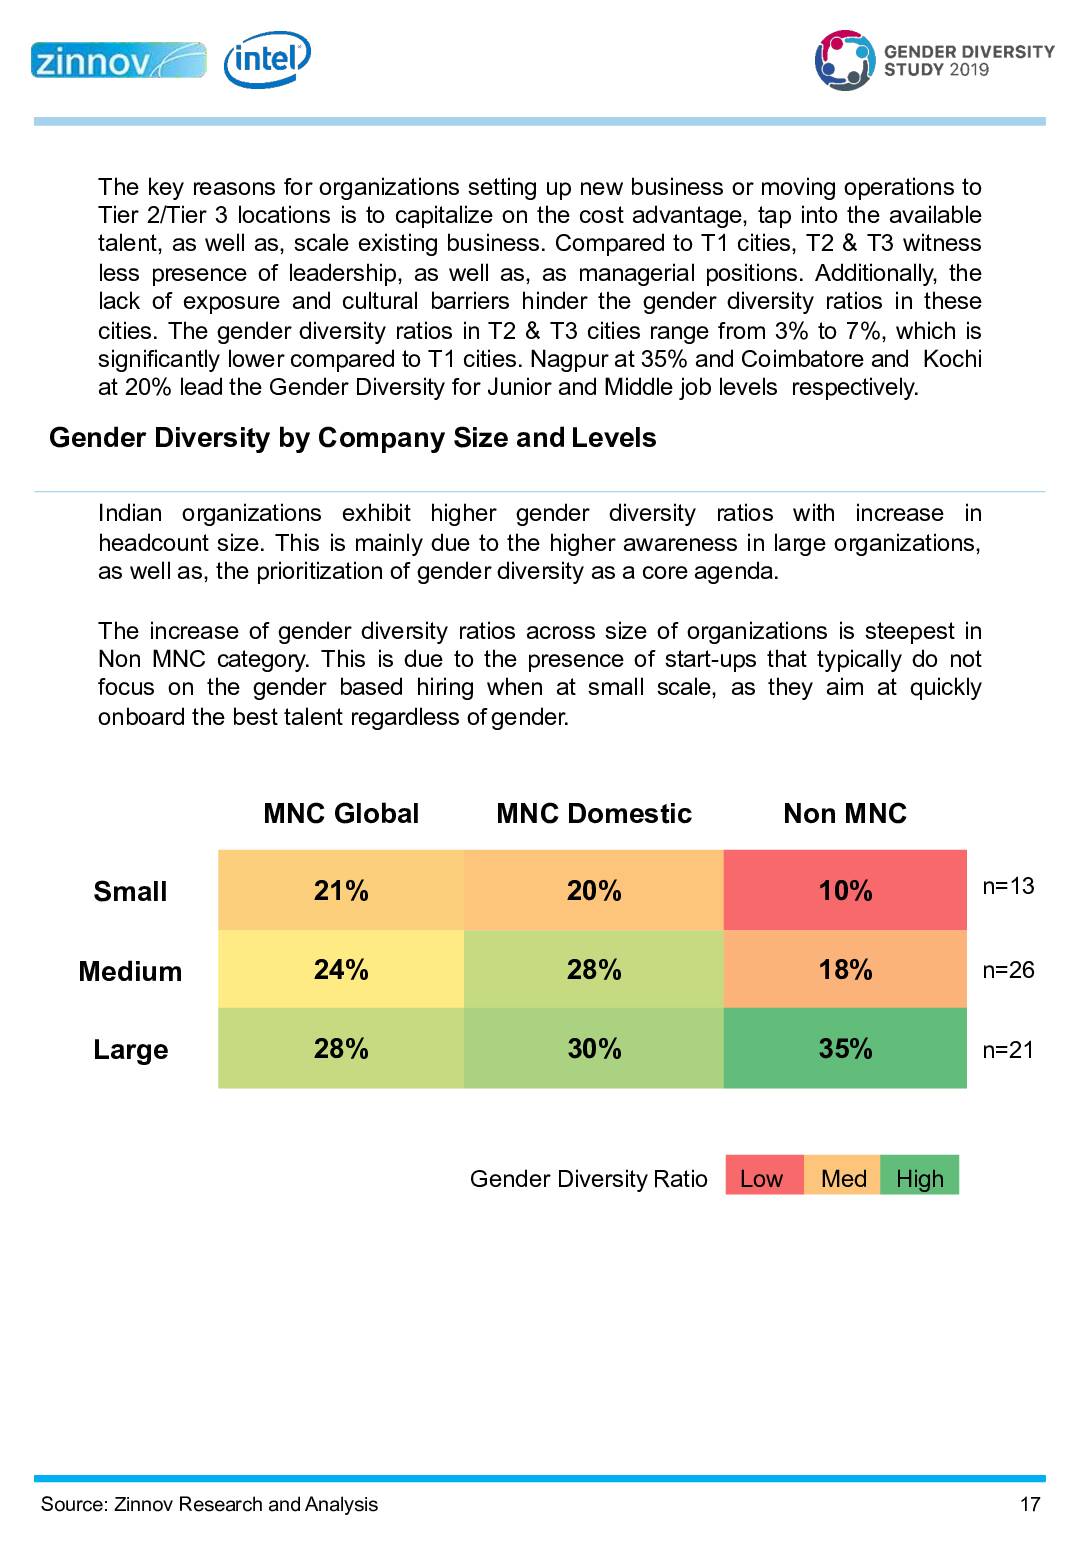 Zinnov Intel Gender Diversity Benchmark Study 201917